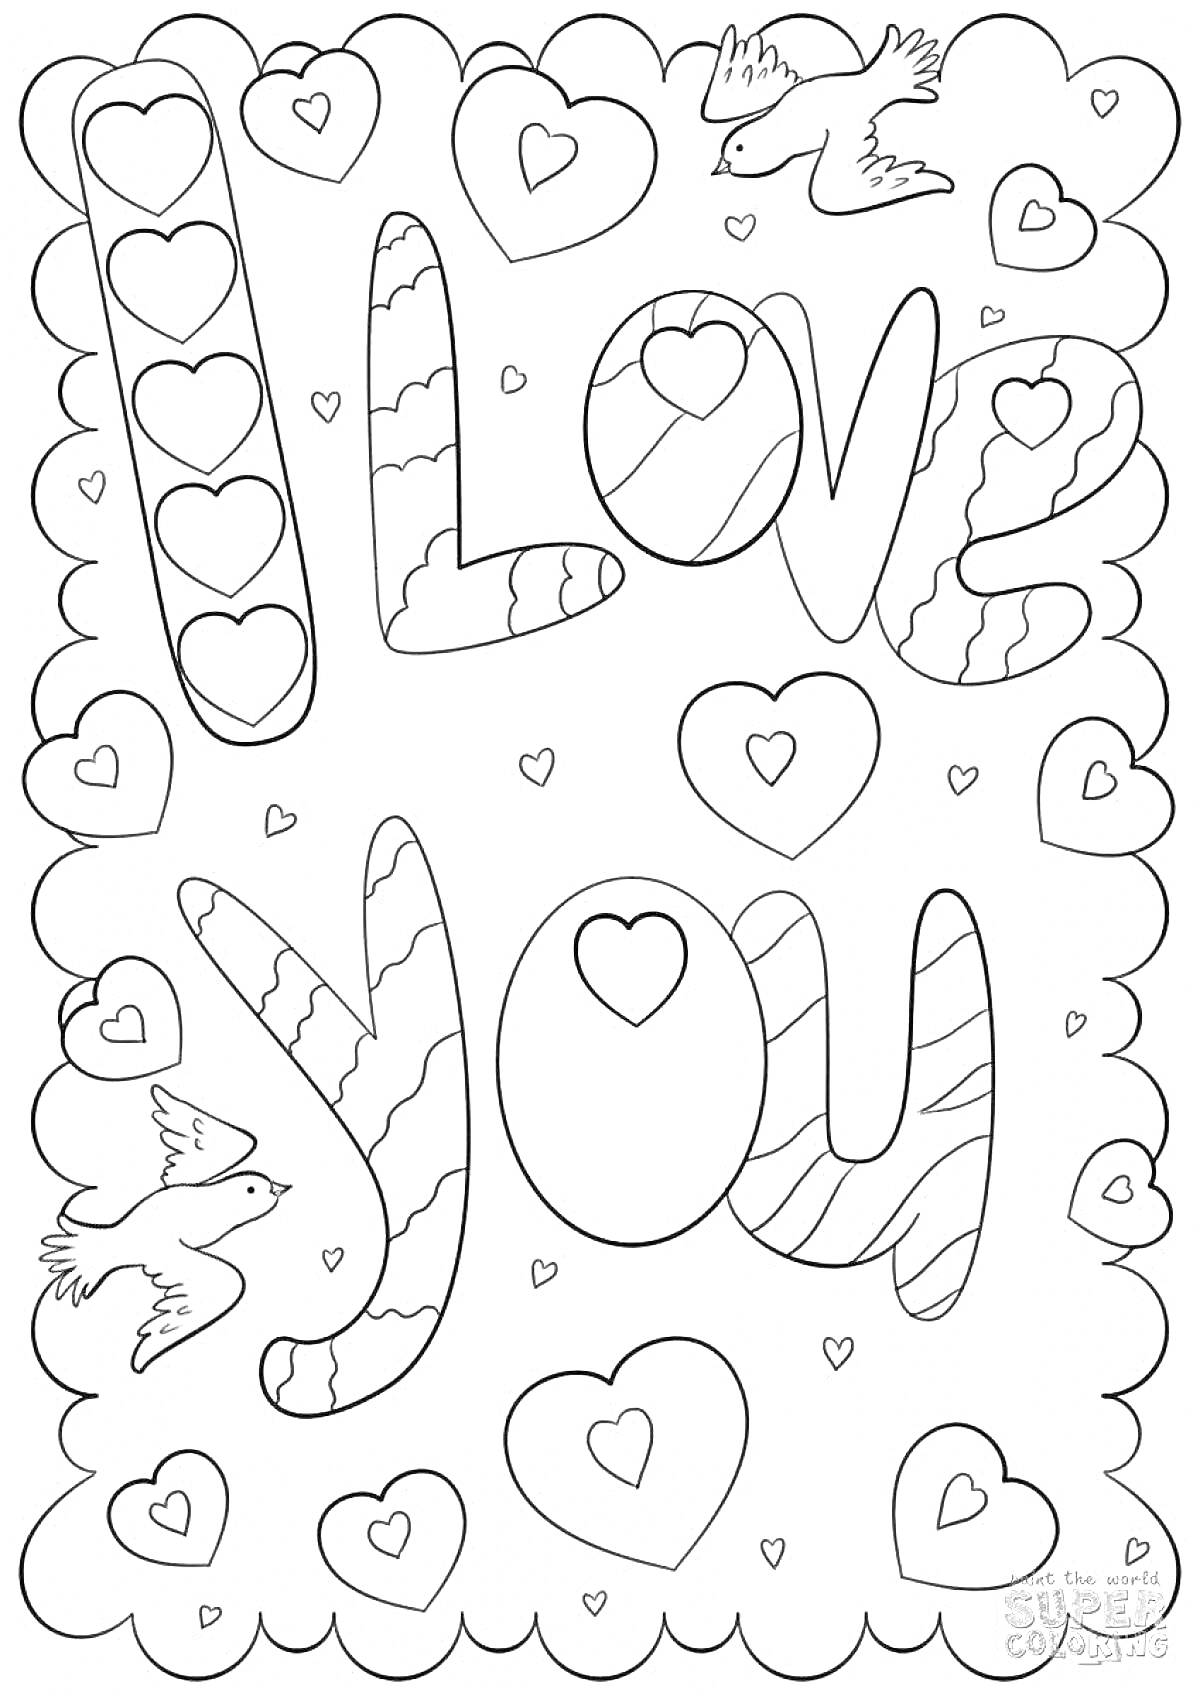 На раскраске изображено: Любовь, Я тебя люблю, Сердца, Голуби, Романтика, Признание в любви